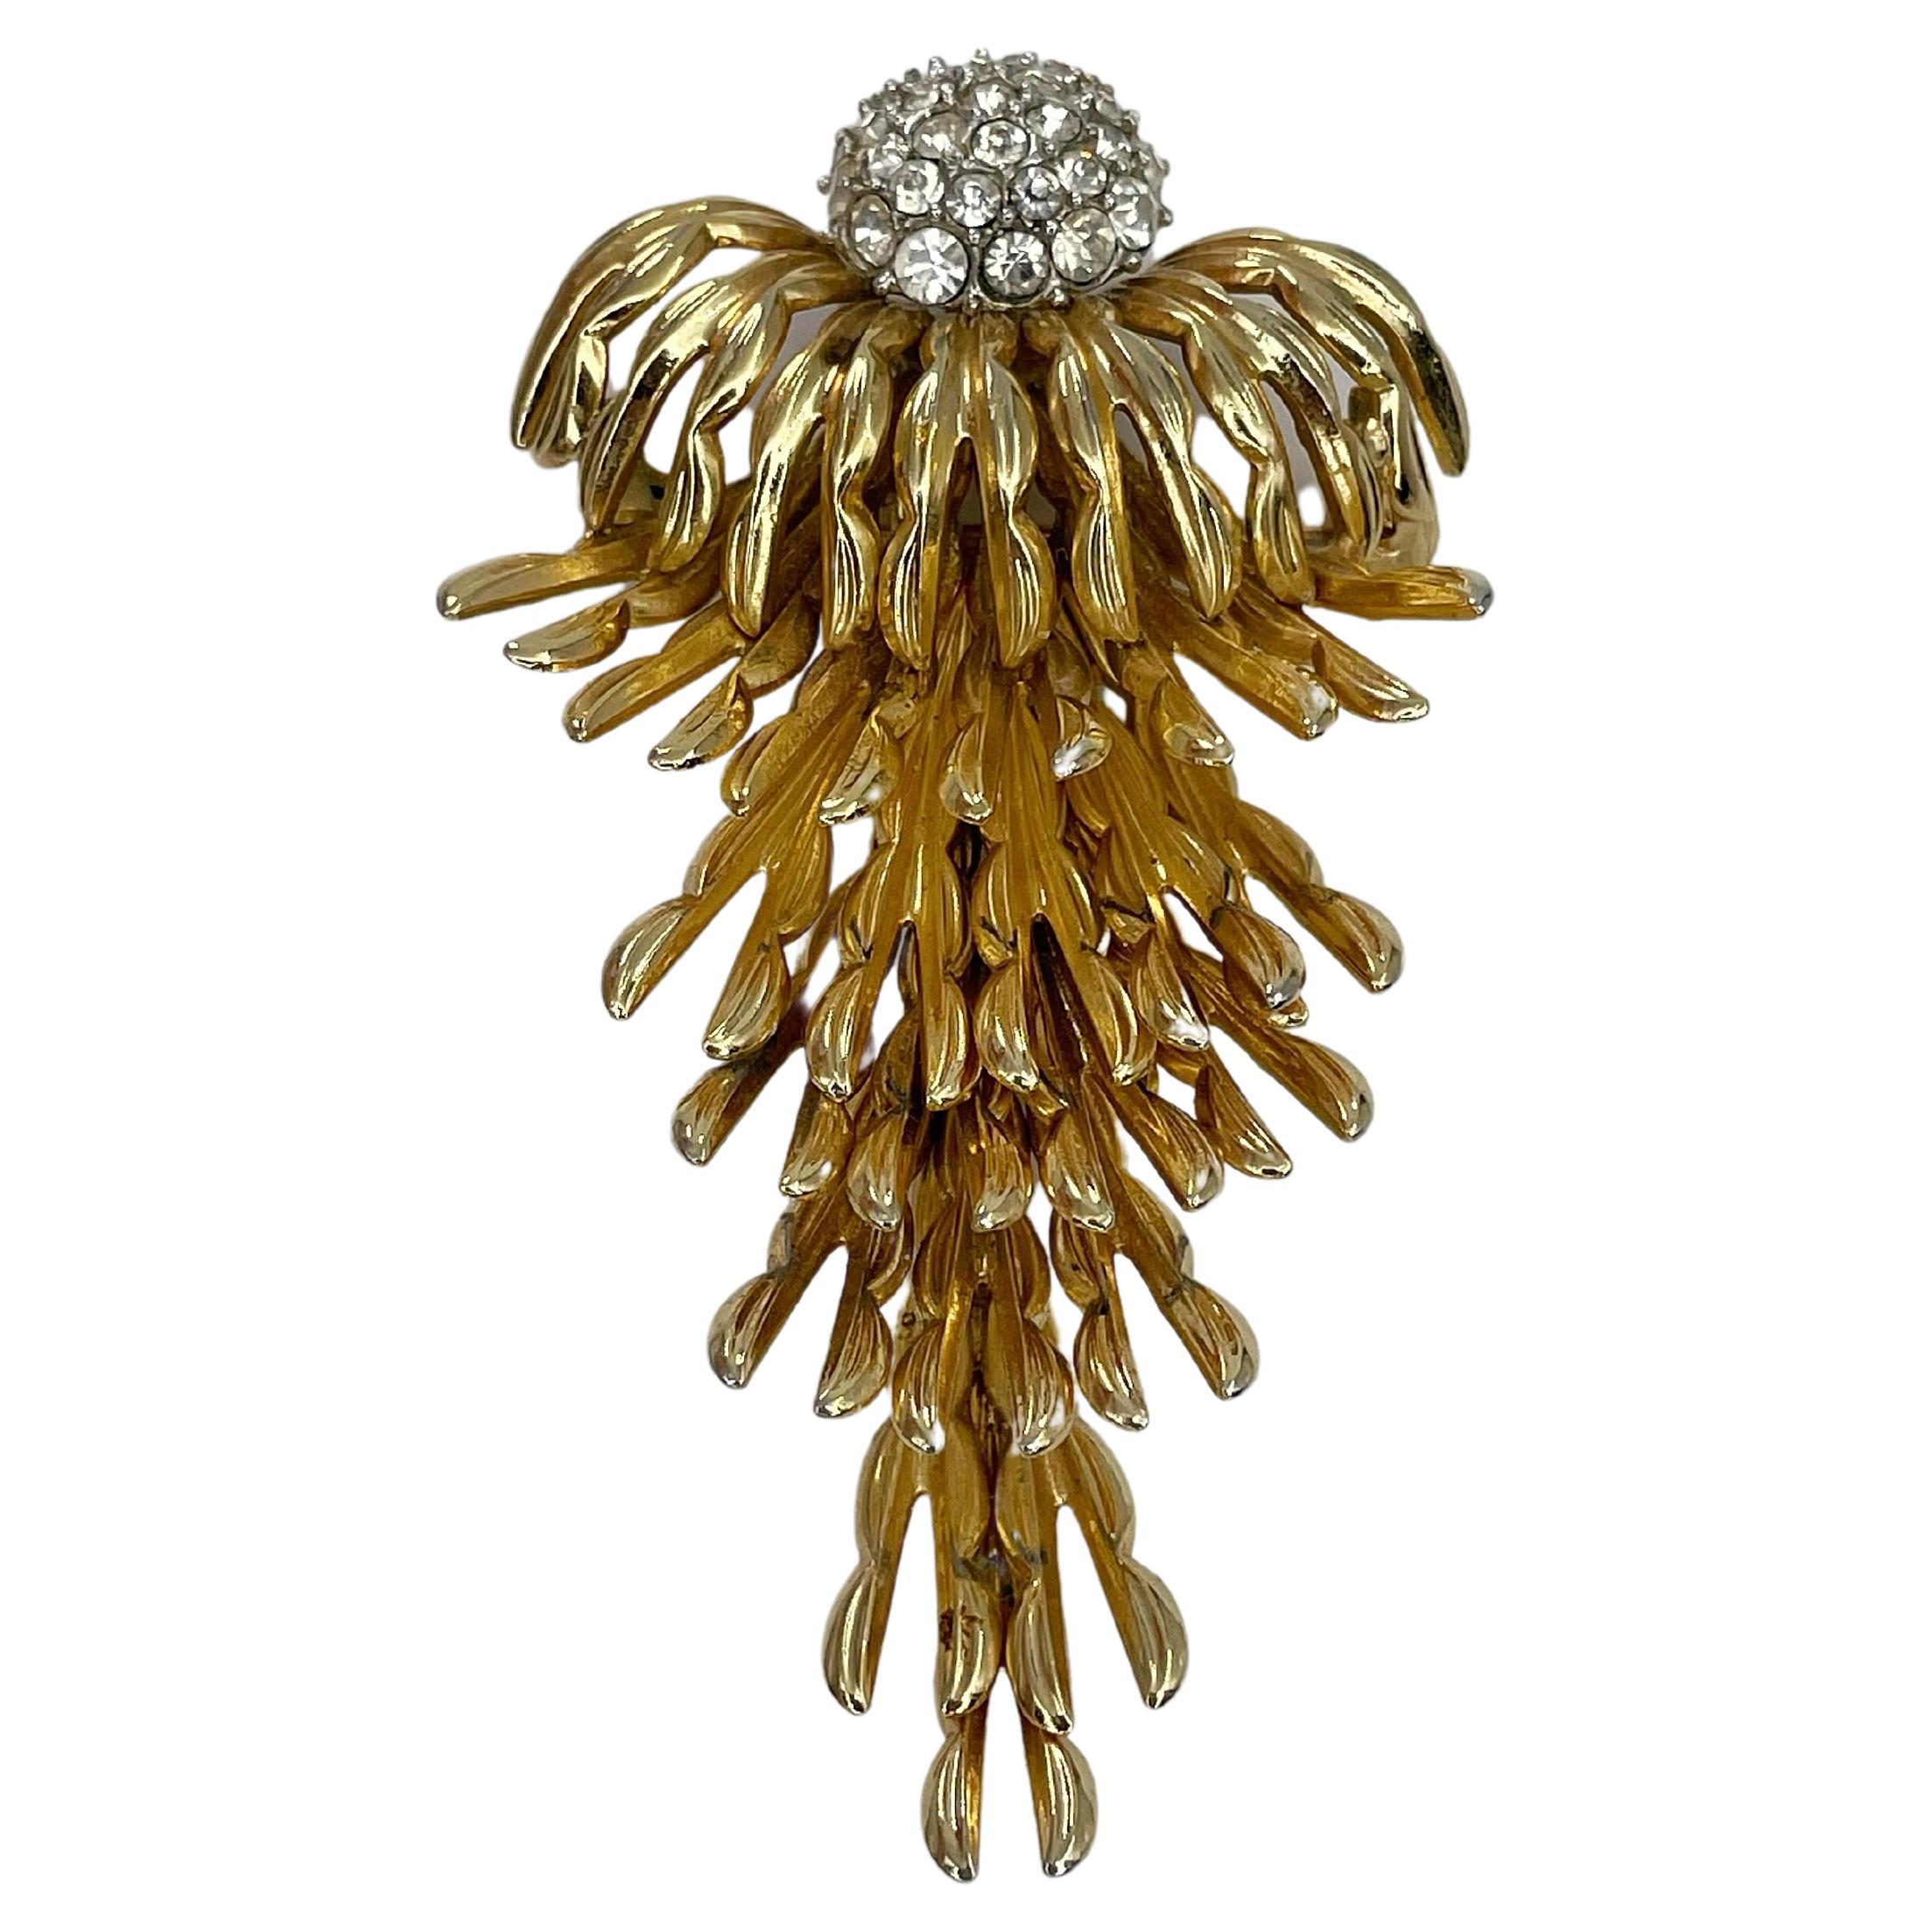 1965 Vintage Grosse Gold Tone Rhinestone Cascading Pin Brooch